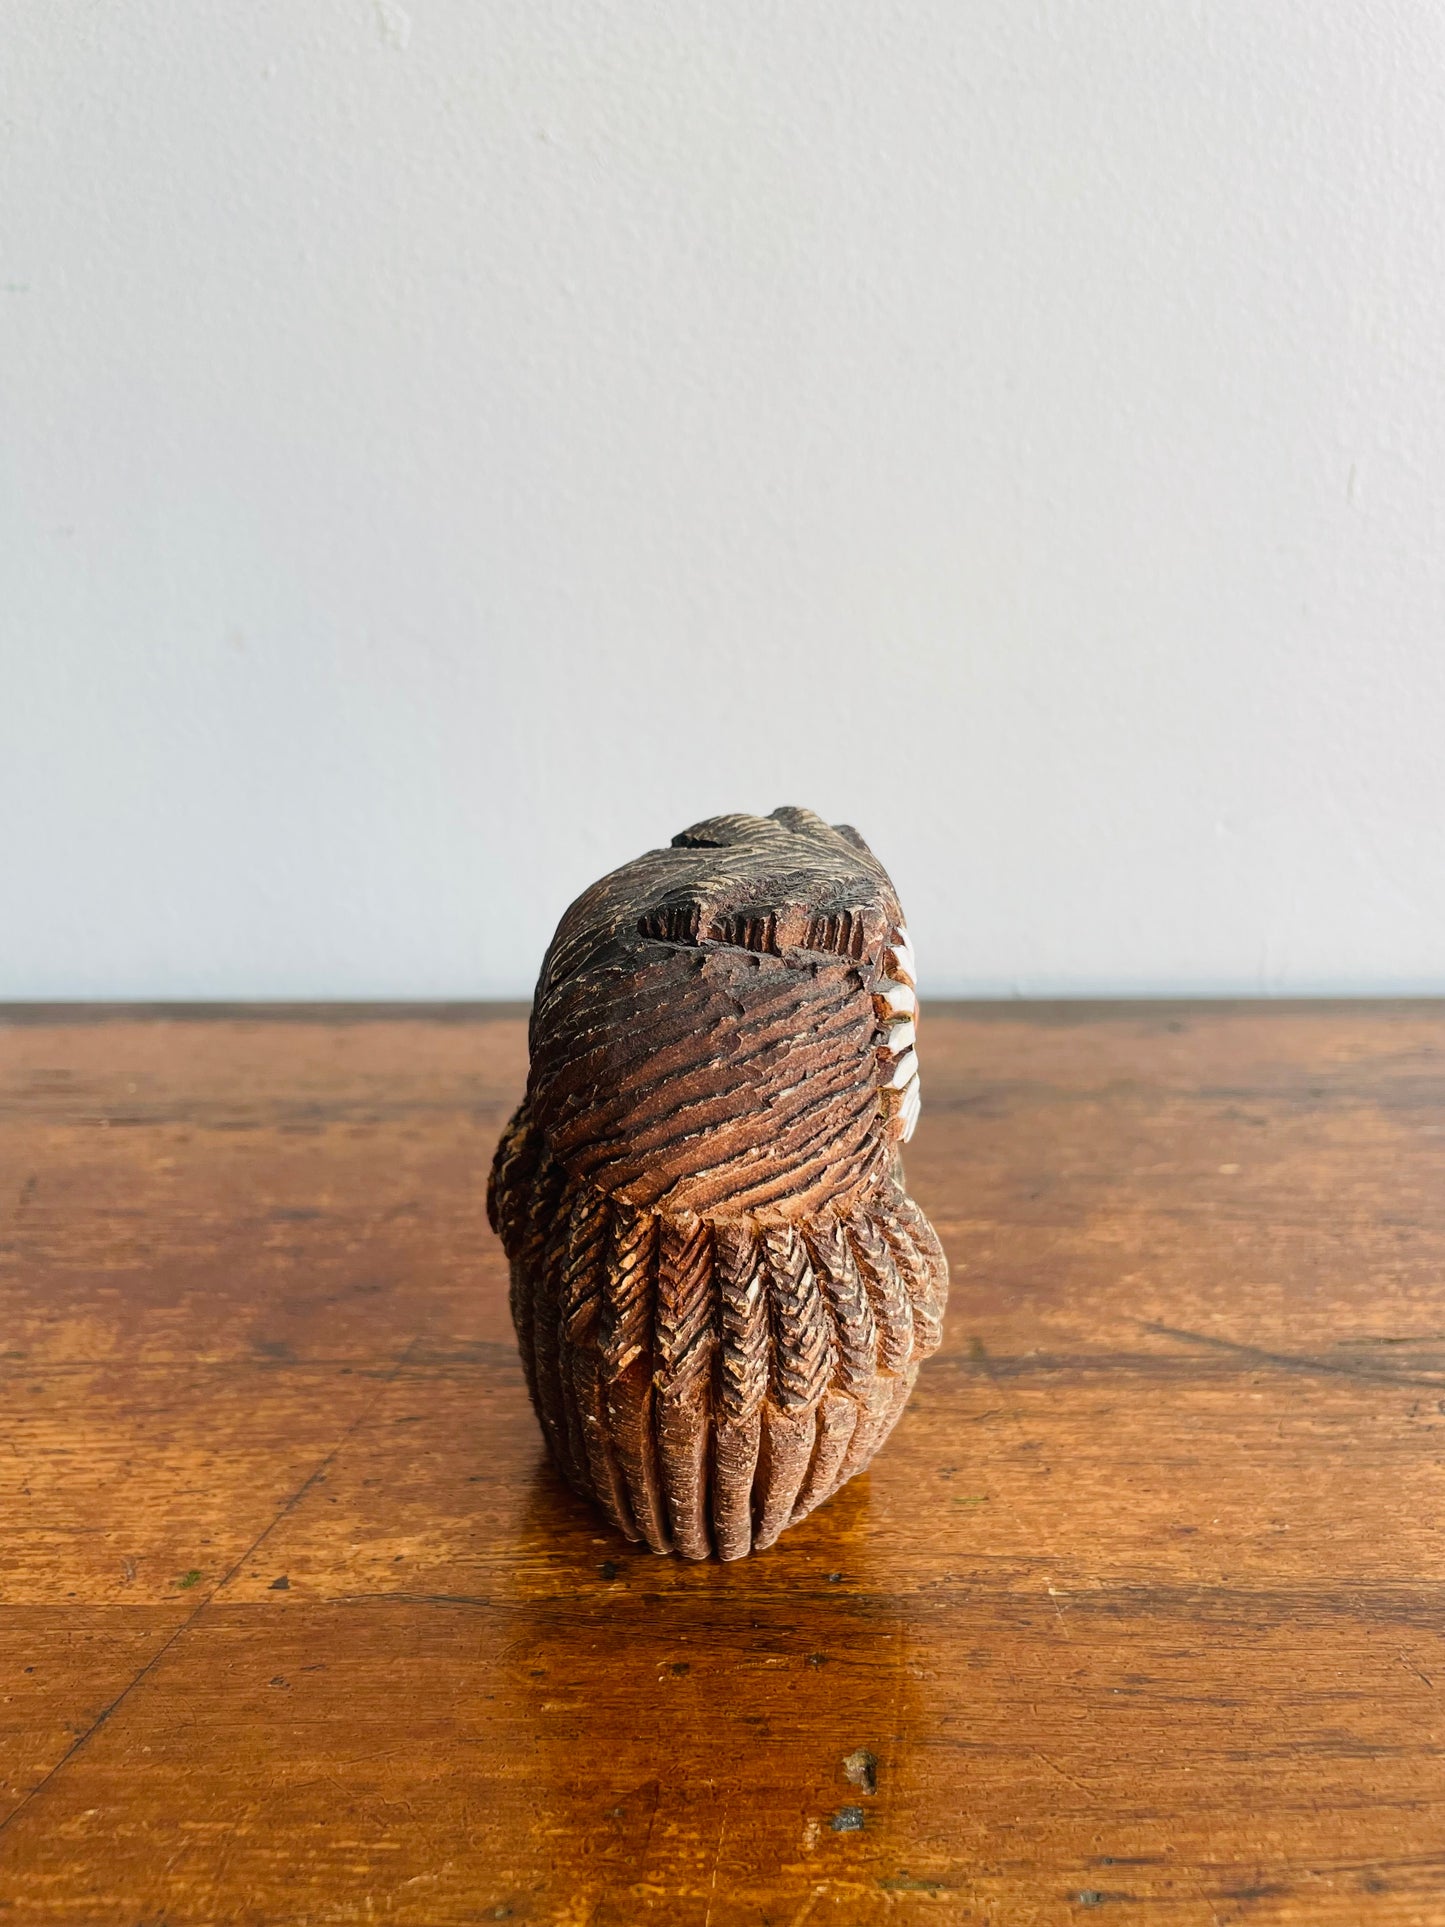 Artesania Rinconada Uruguay Folk Art Pottery Owl Figurine - Retired #58